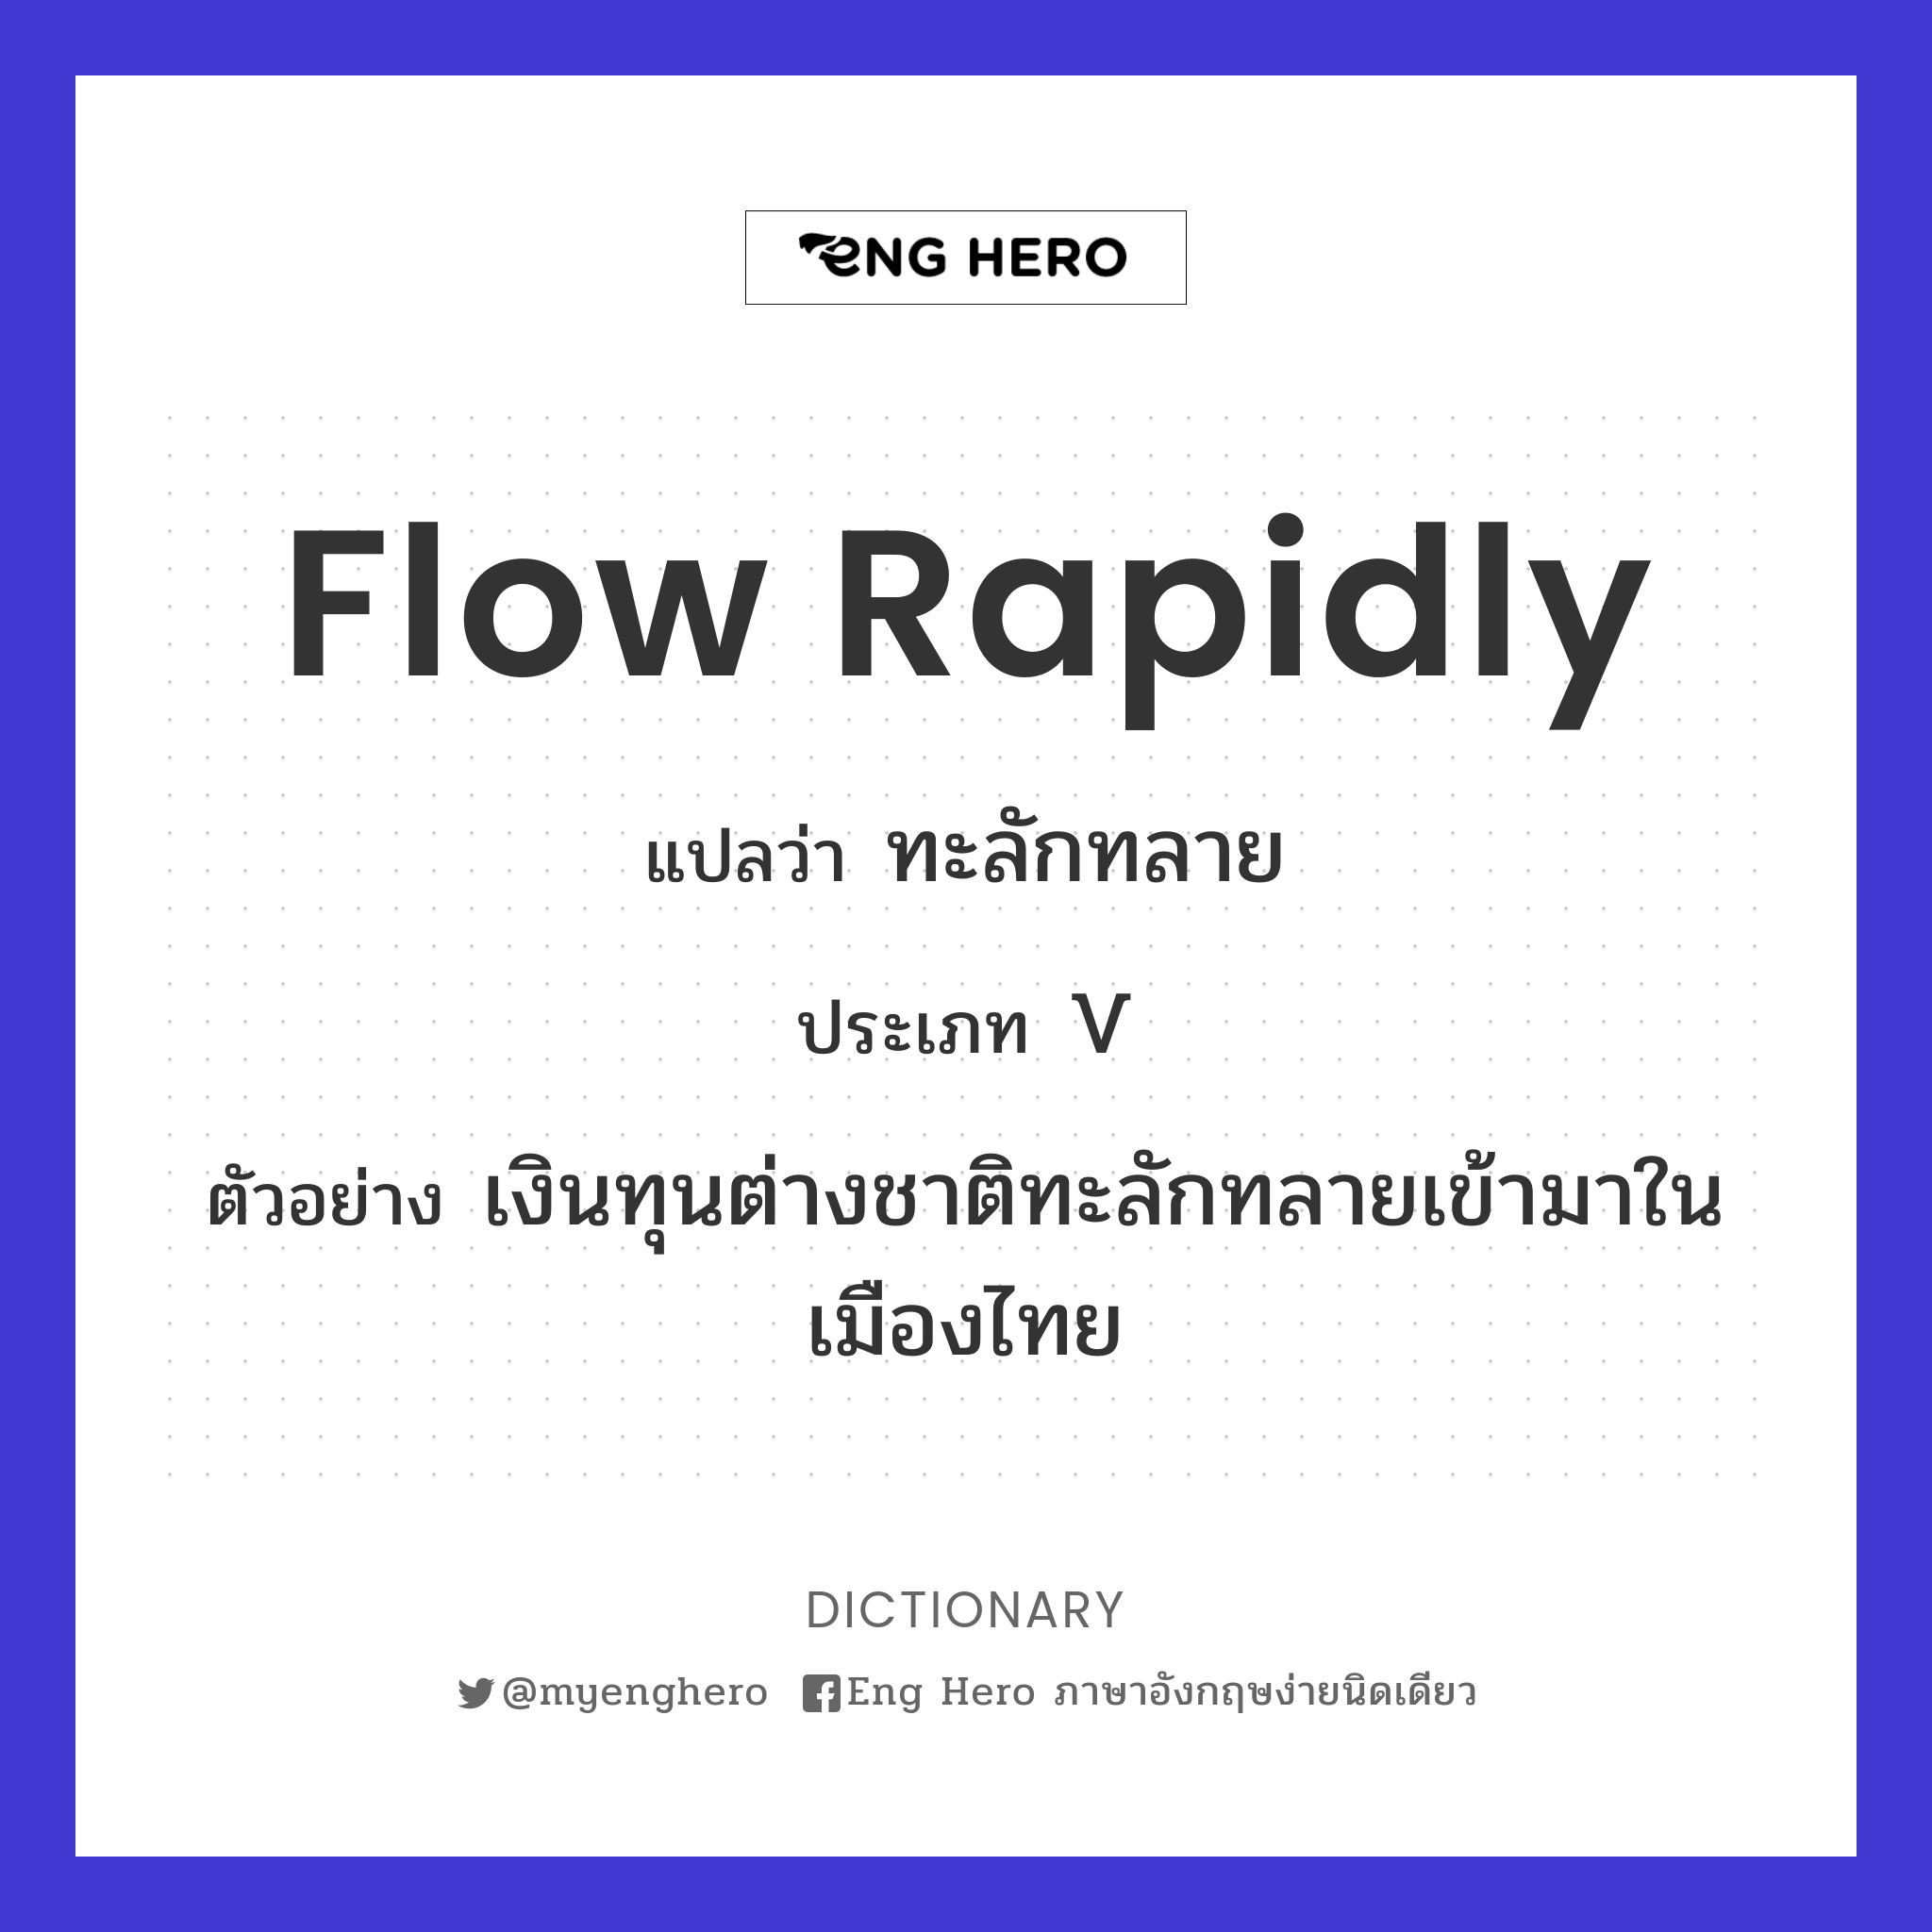 flow rapidly